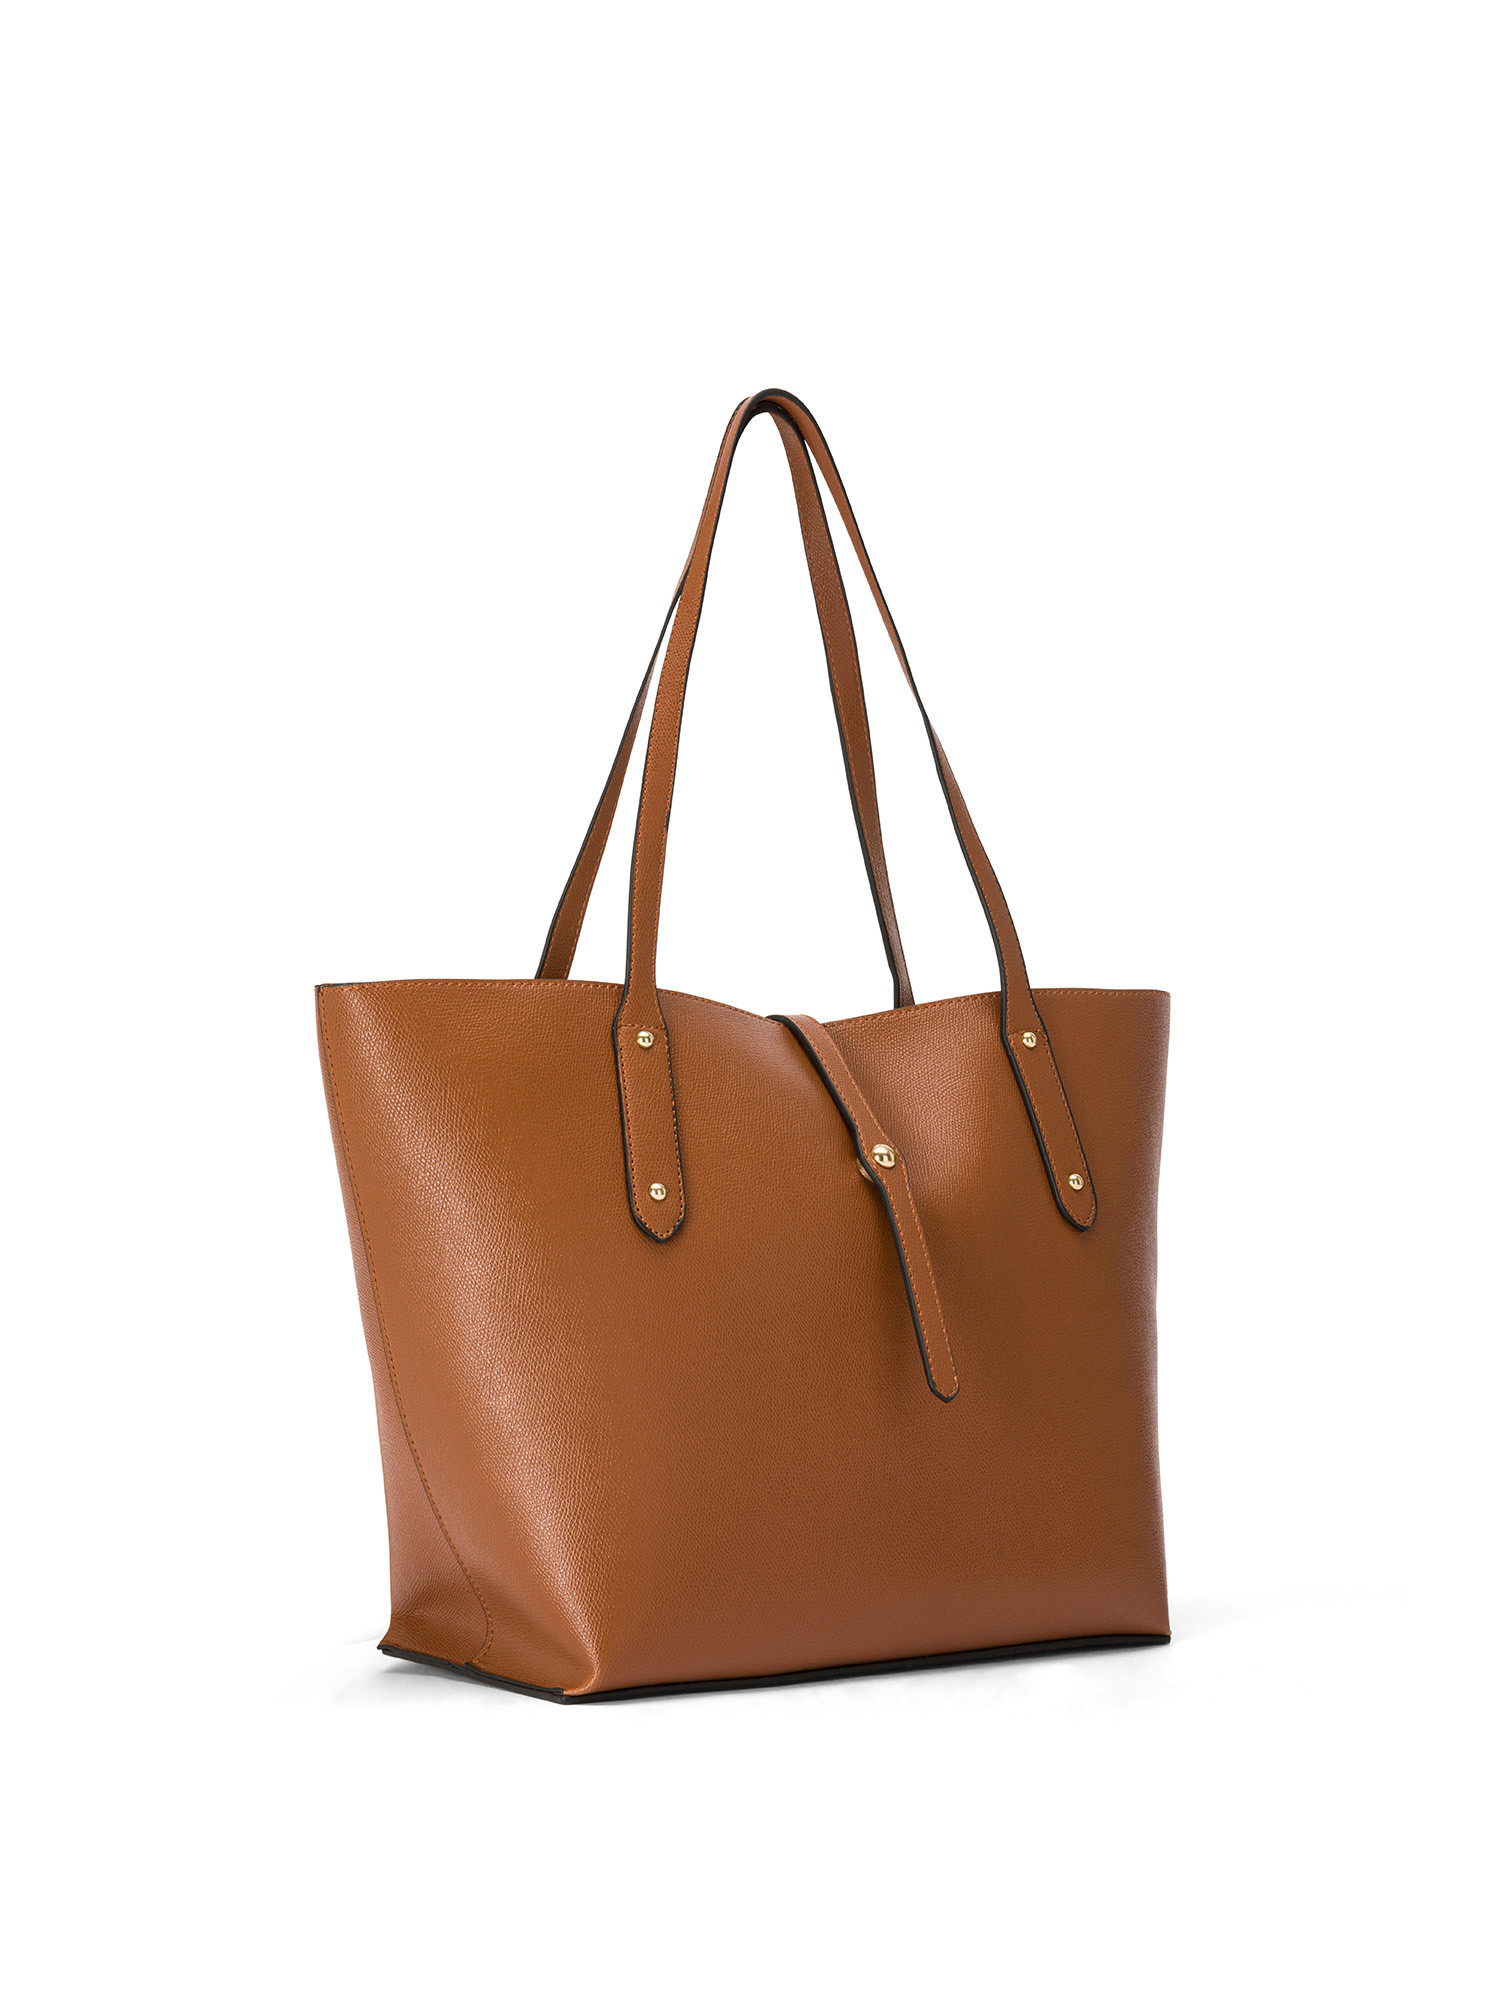 Koan - Shopping bag, Marrone, large image number 1